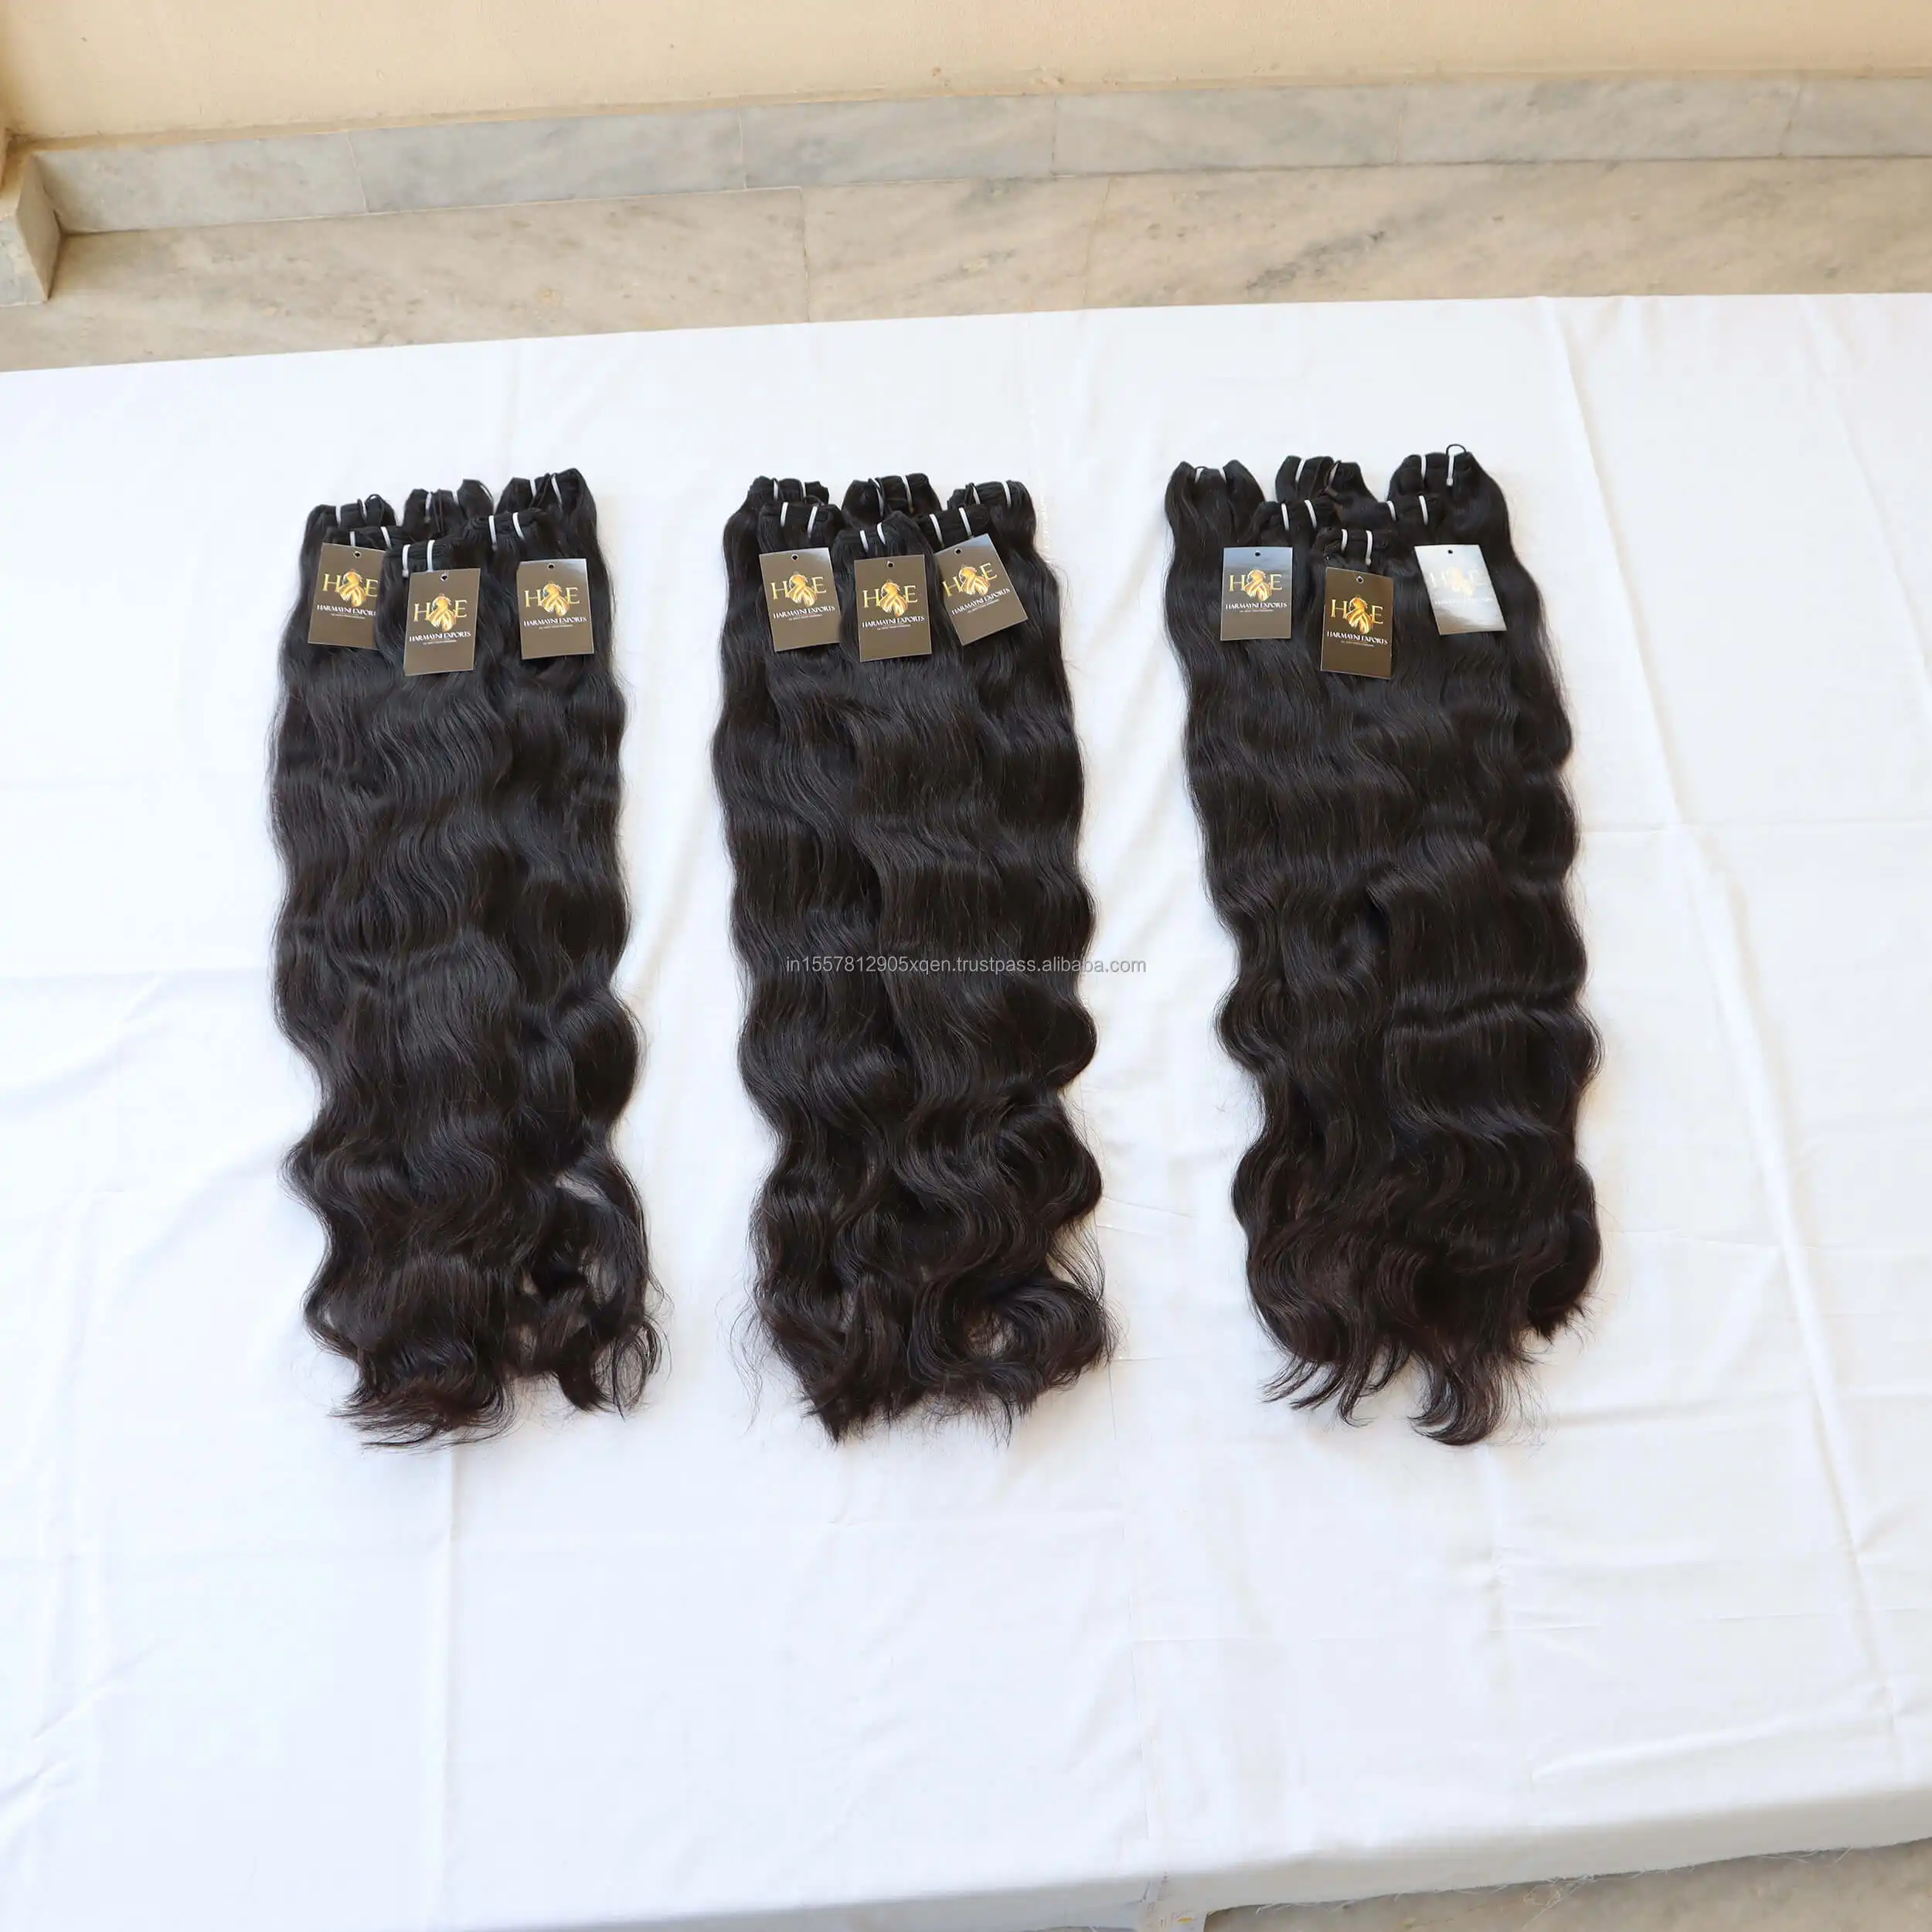 Vendedor de cabelo brasileiro, cabelo cambodiano sem processado, atacado, cabelo humano do templo indiano, cutícula cru virgem alinhado, vendedores